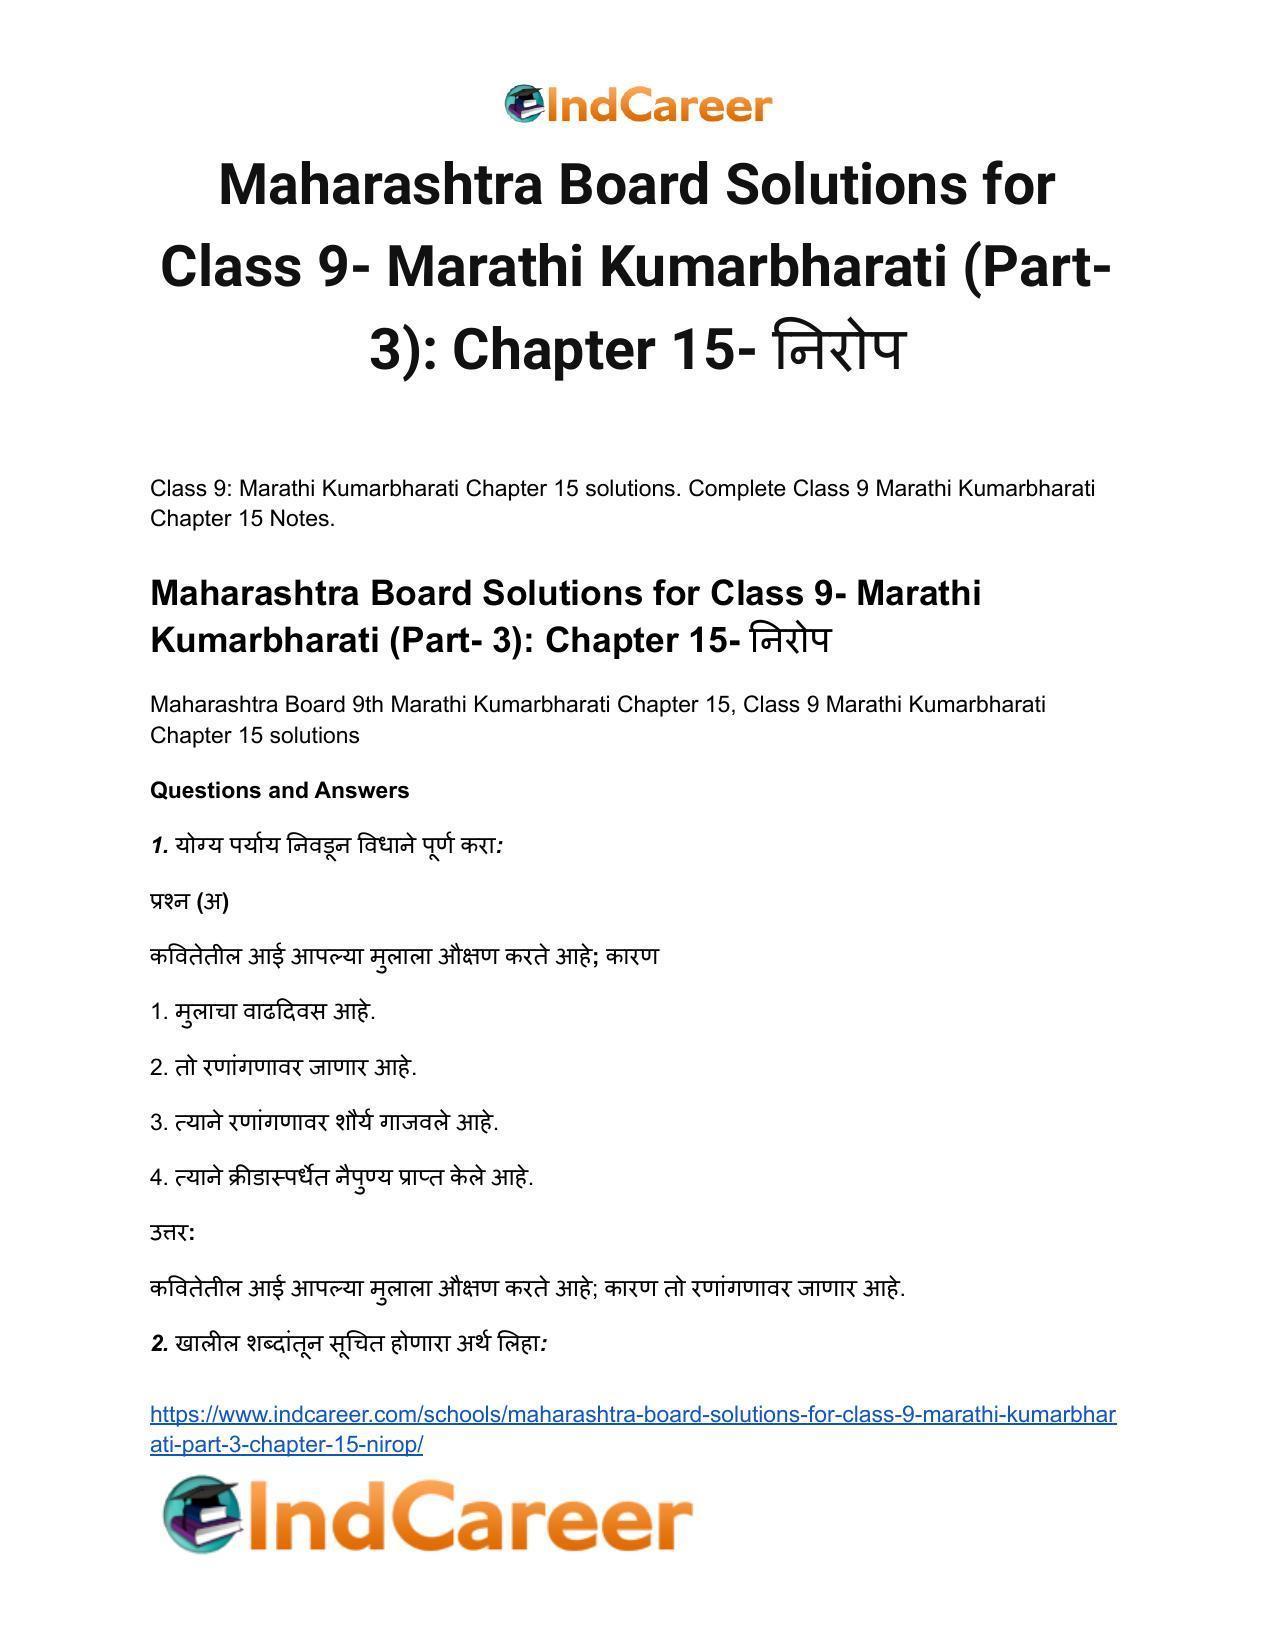 Maharashtra Board Solutions for Class 9- Marathi Kumarbharati (Part- 3): Chapter 15- निरोप - Page 2